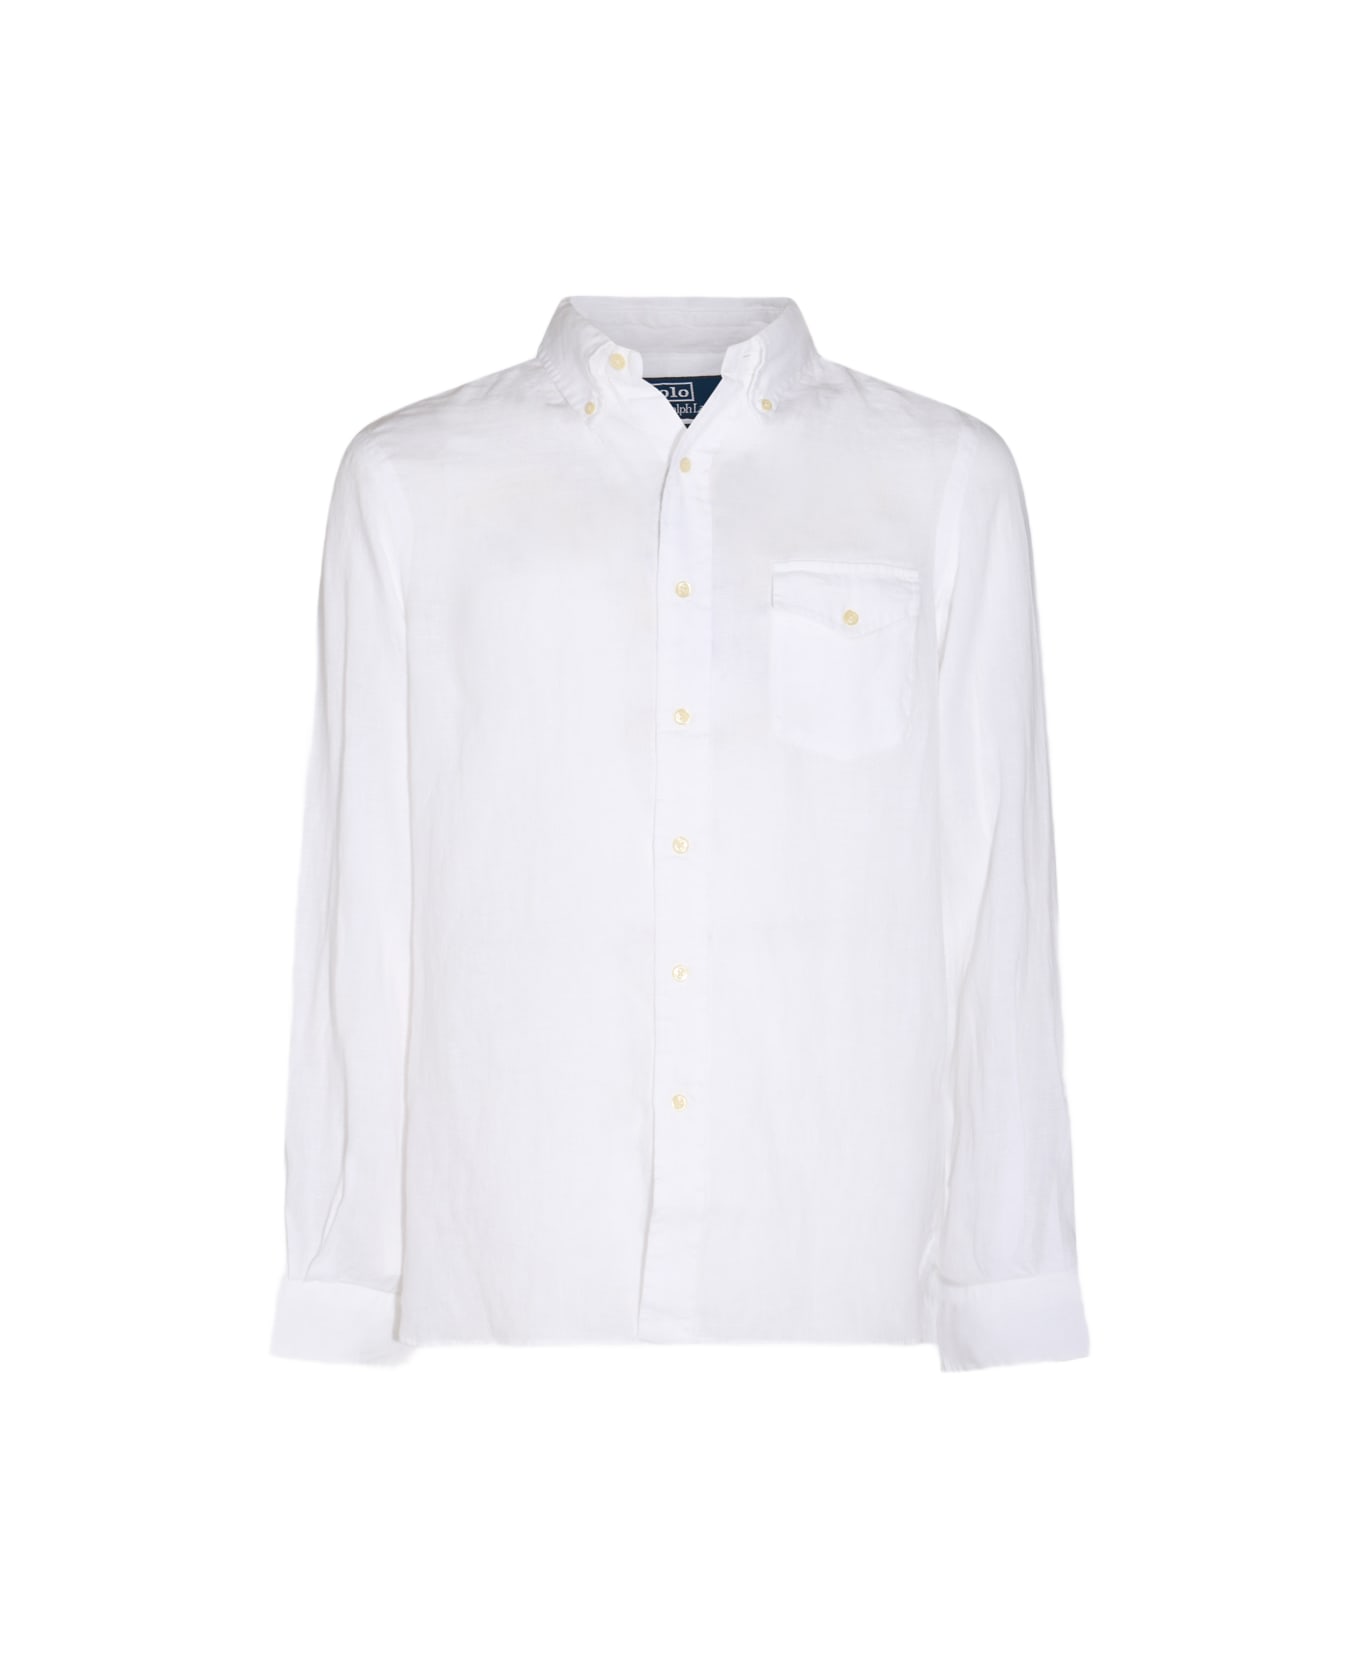 Polo Ralph Lauren White Linen Shirt - White シャツ